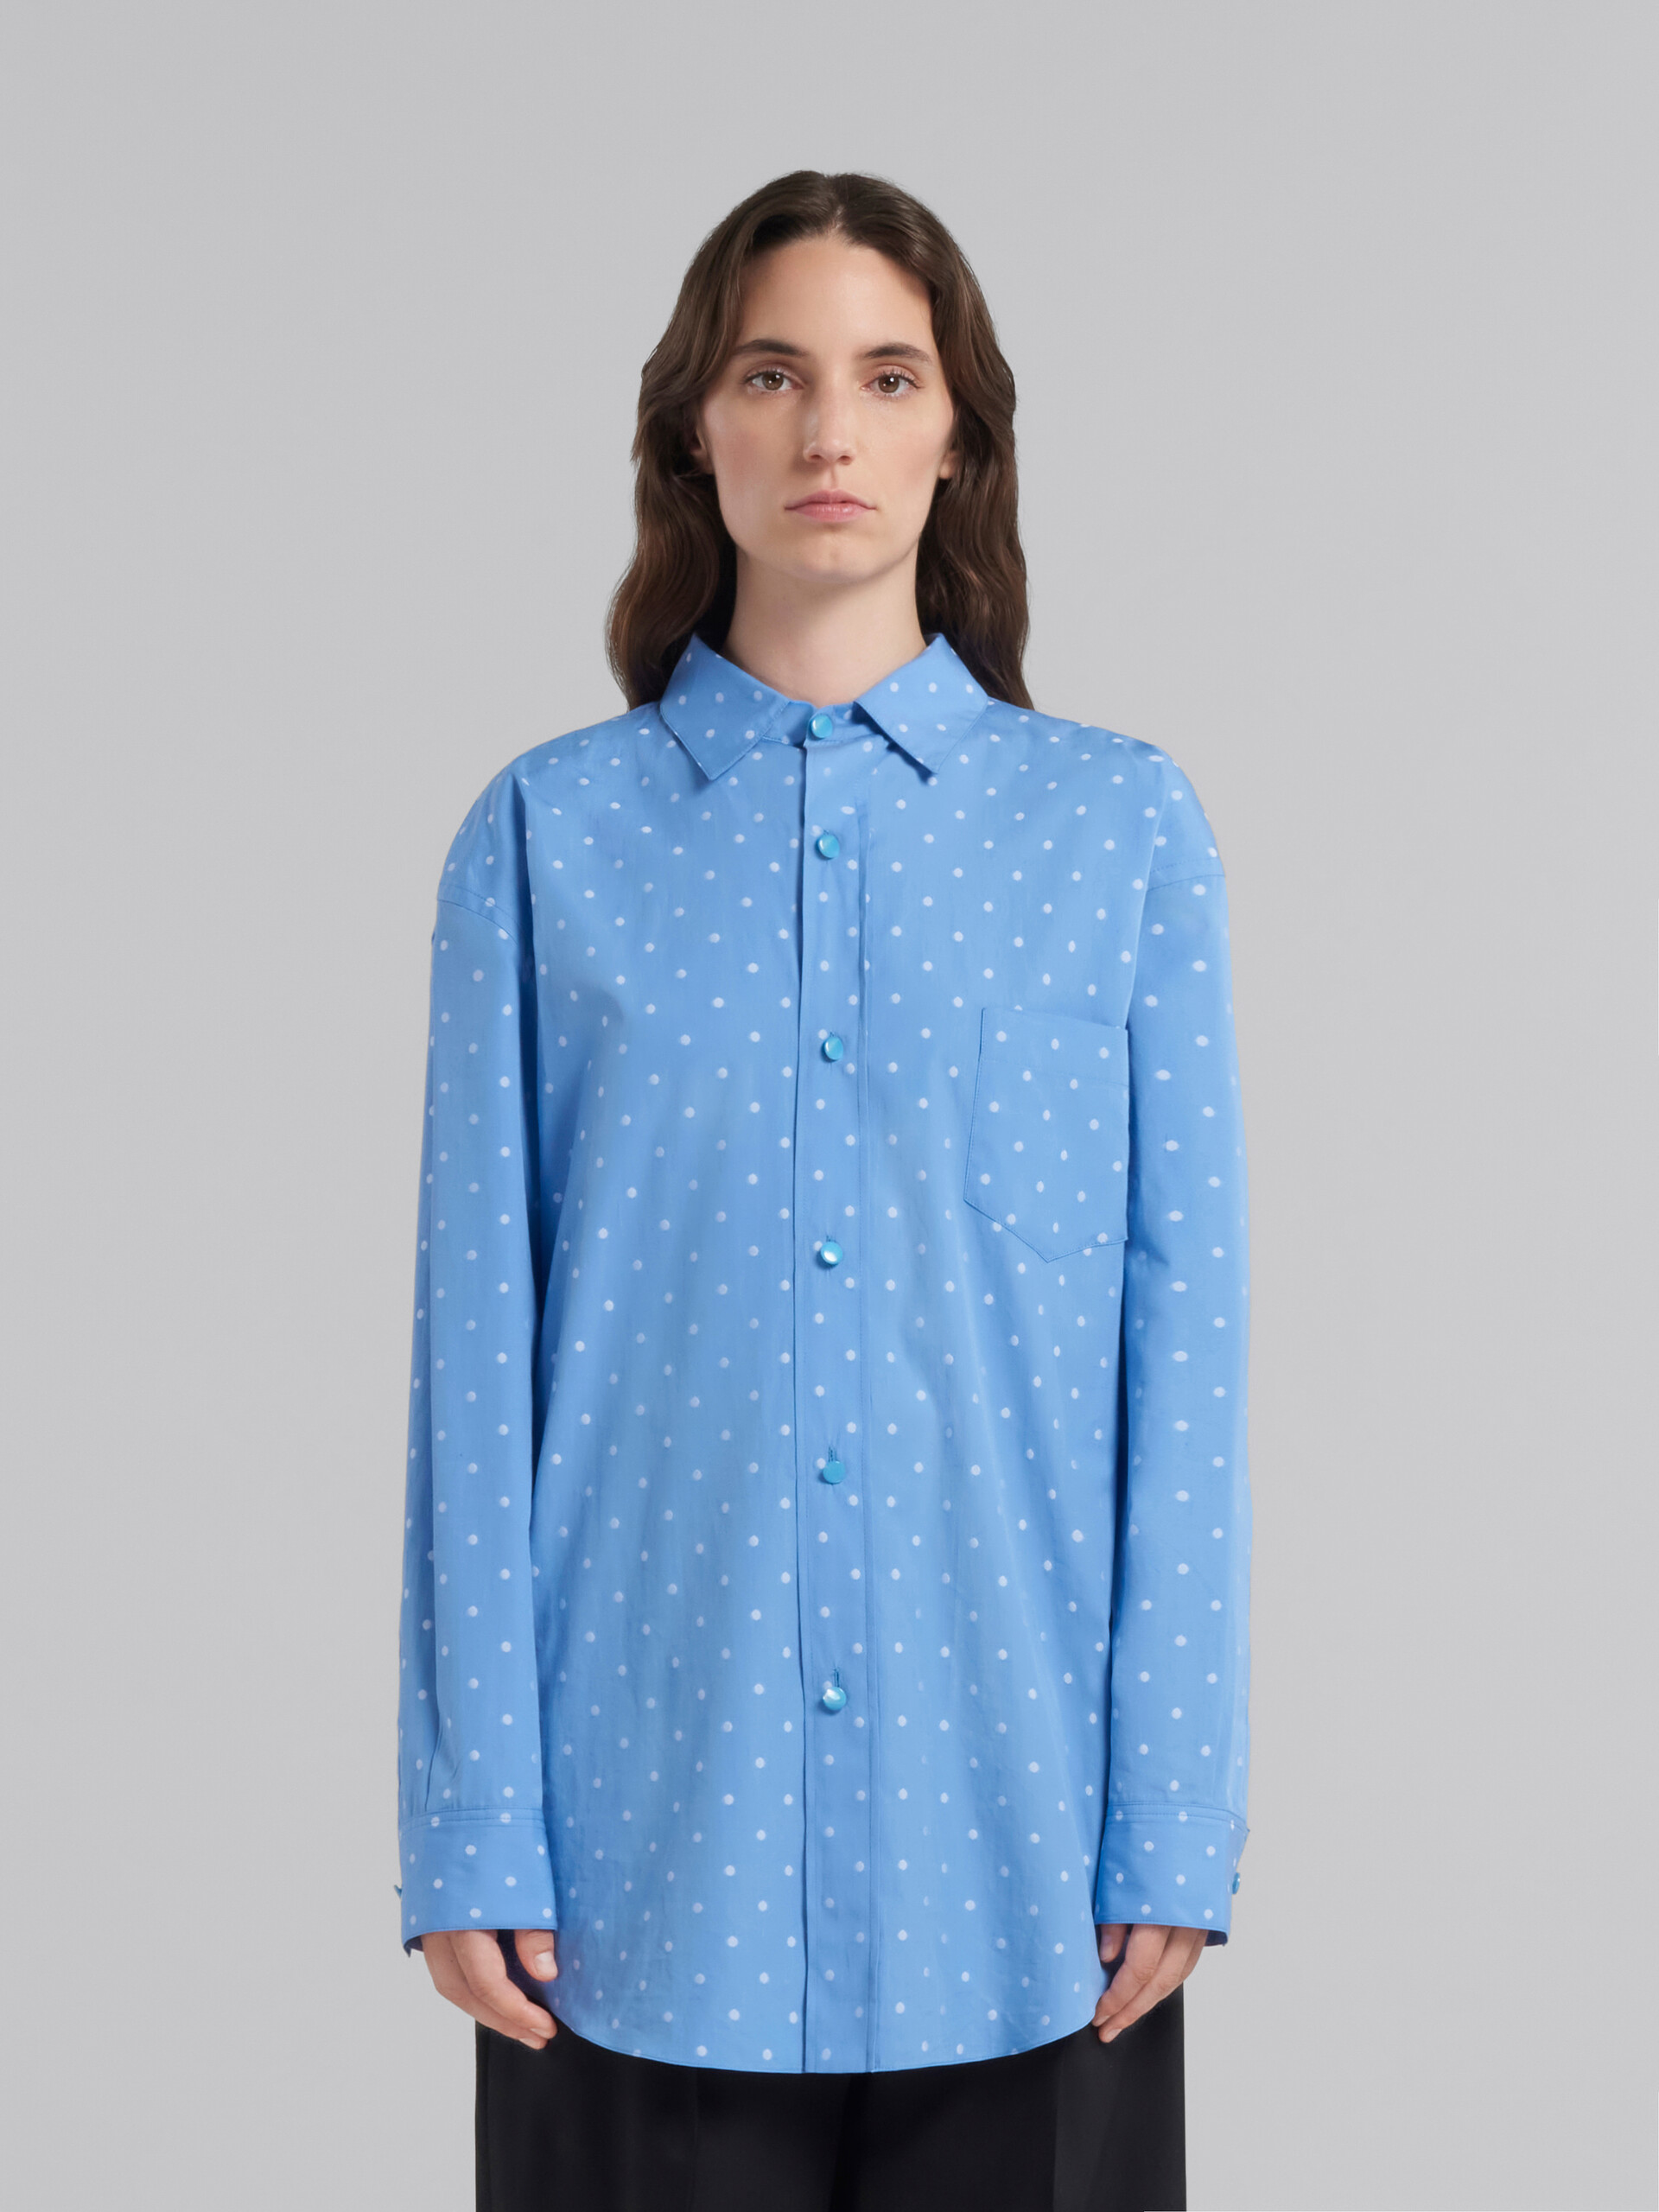 Light blue poplin shirt with polka dots - Shirts - Image 2